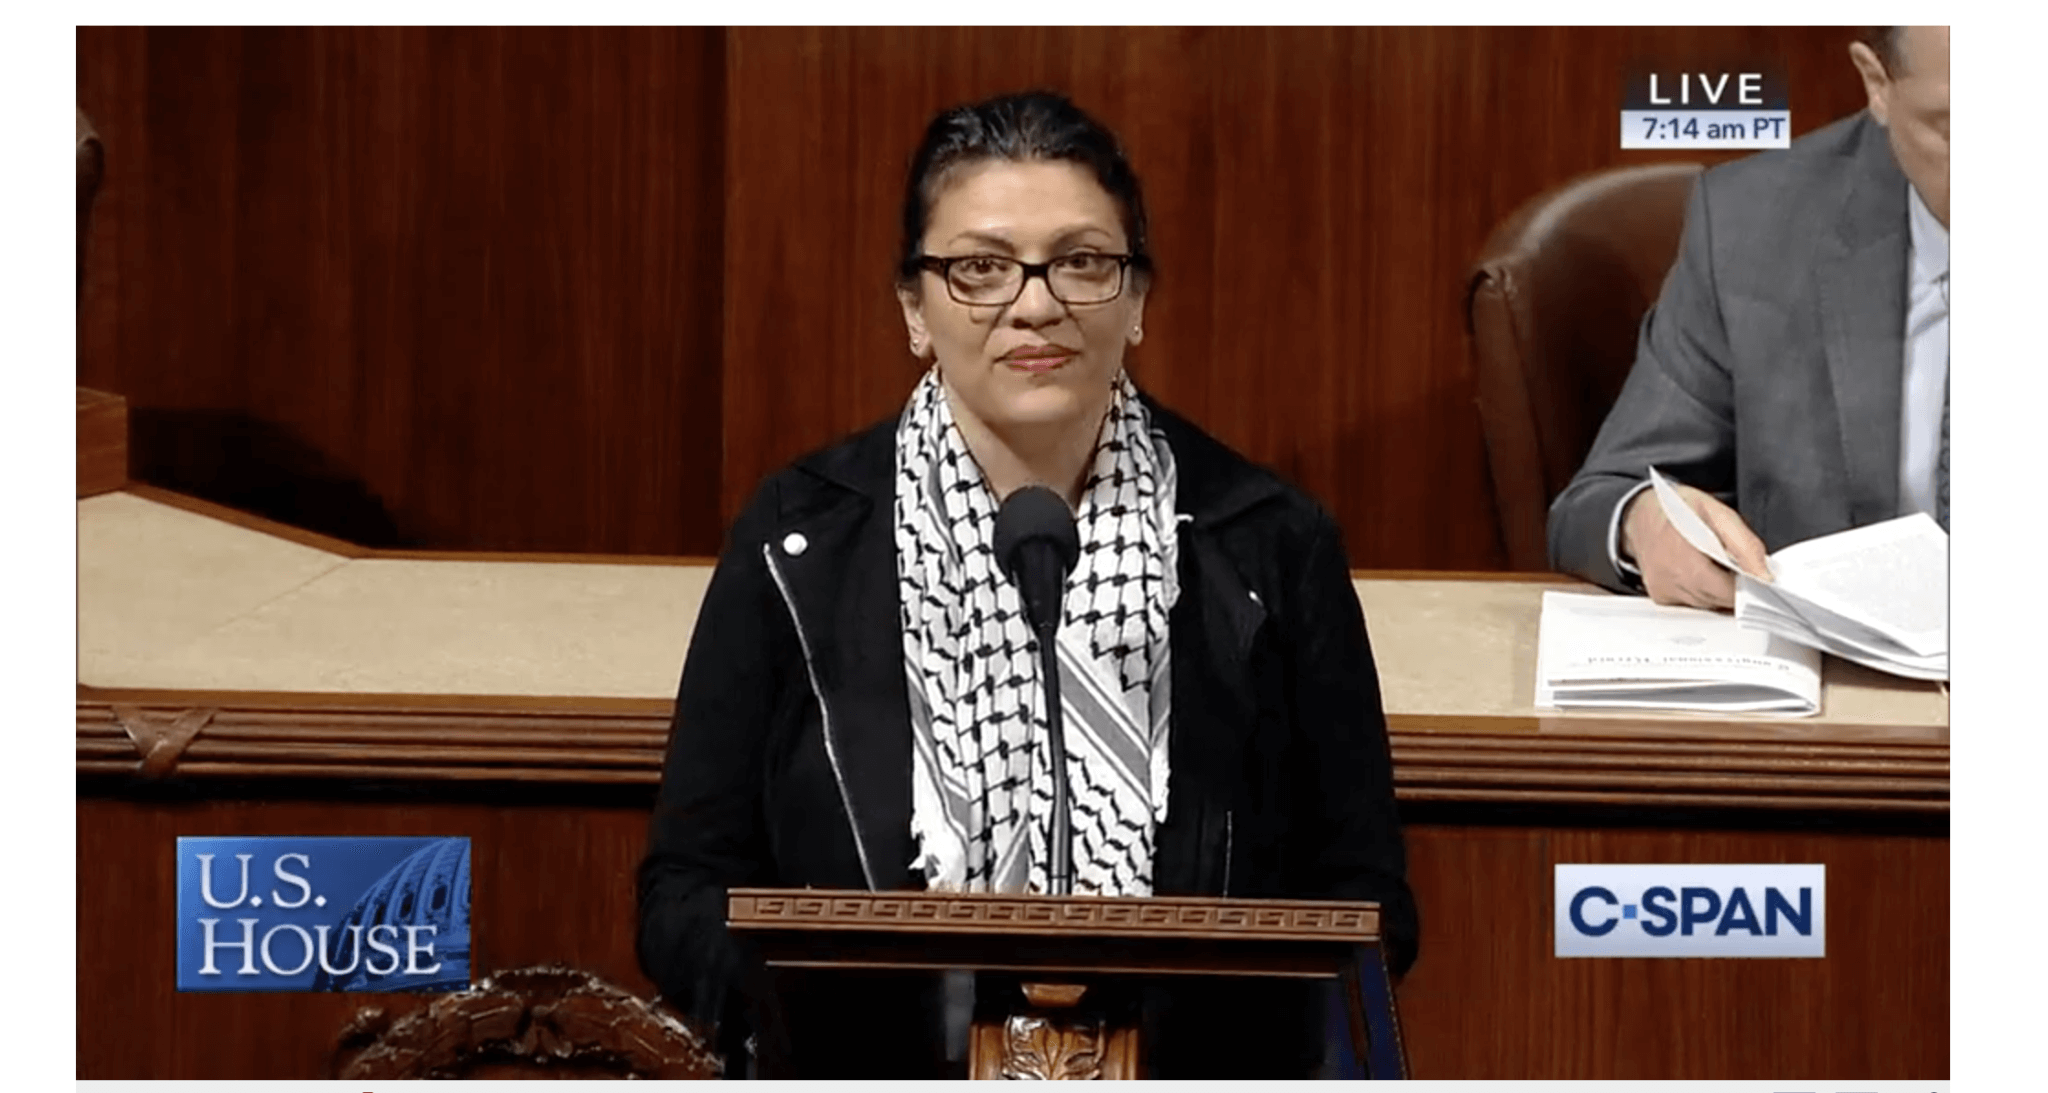 Rep. Rashida Tlaib addressing the House of Representatives on H.Res.326.